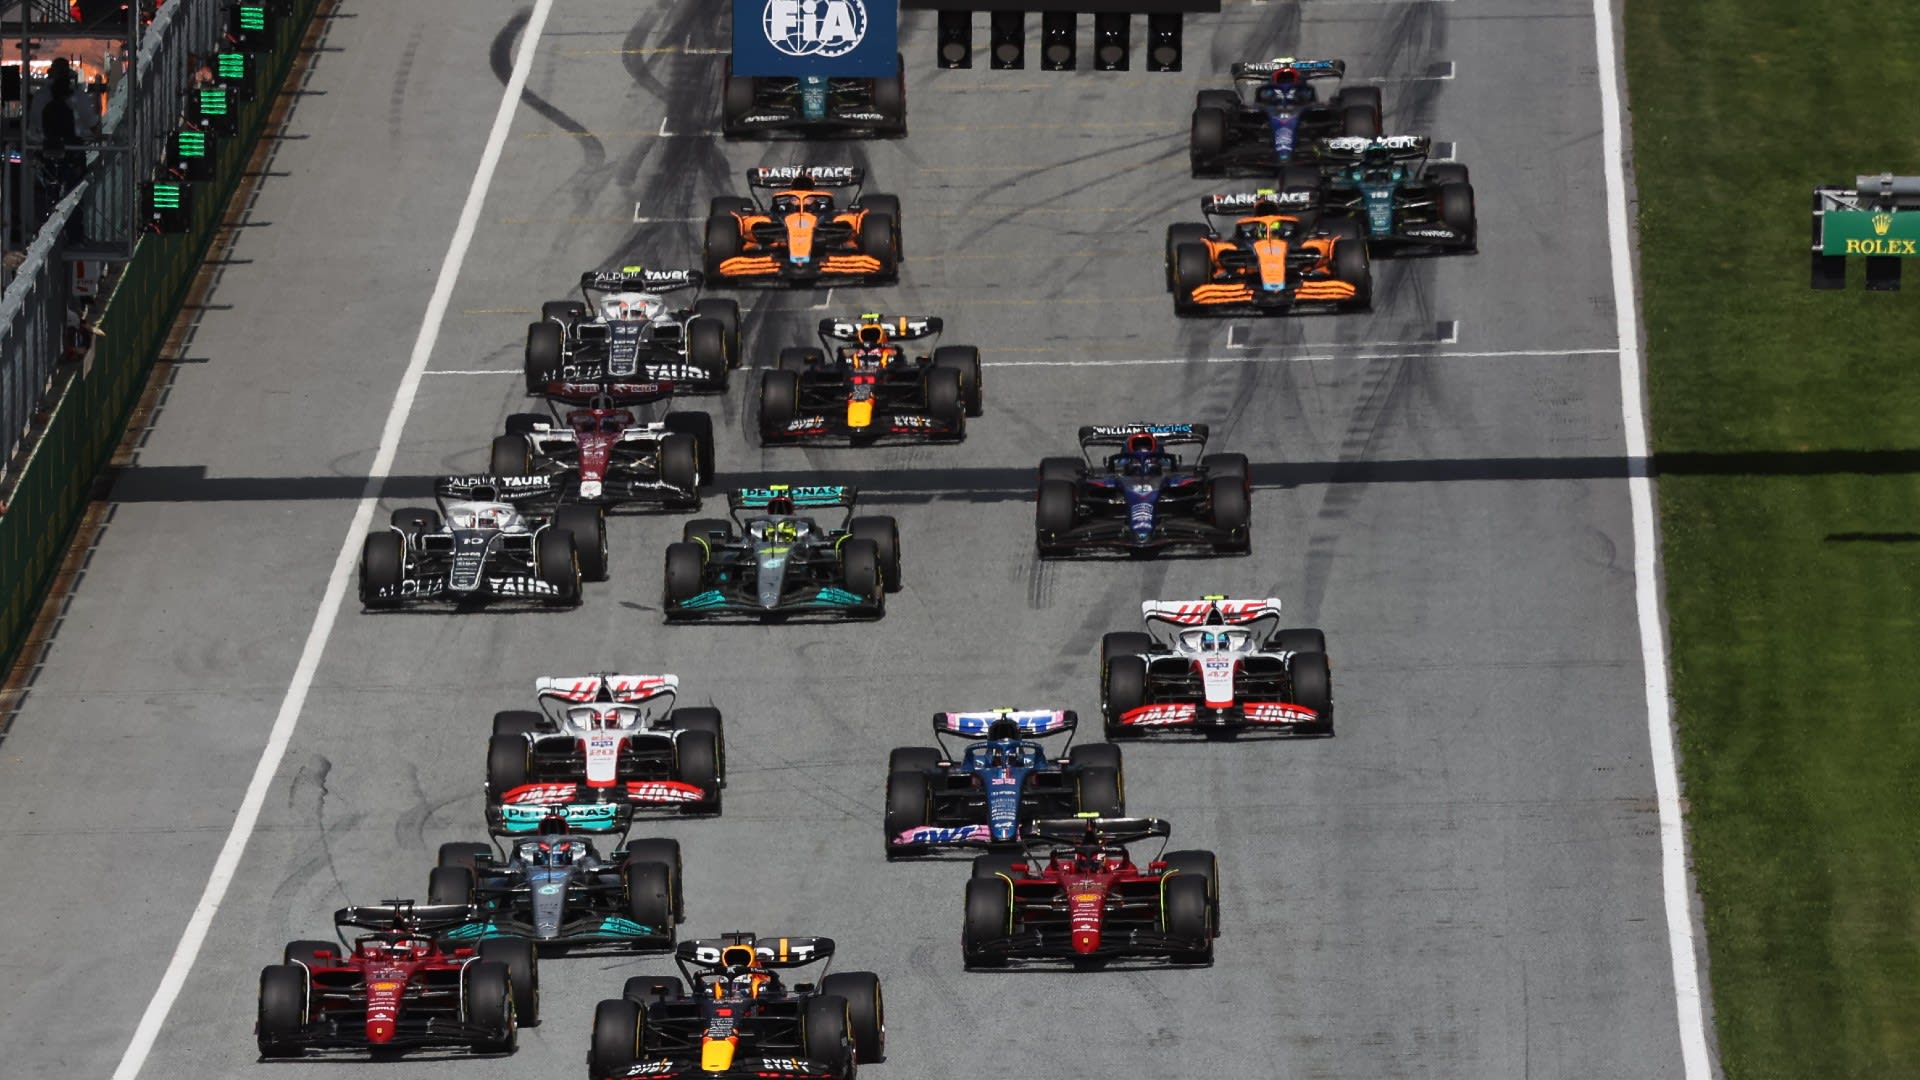 Hamiltons Sao Paulo charge, Alonsos rocket start and Bottas bossing it